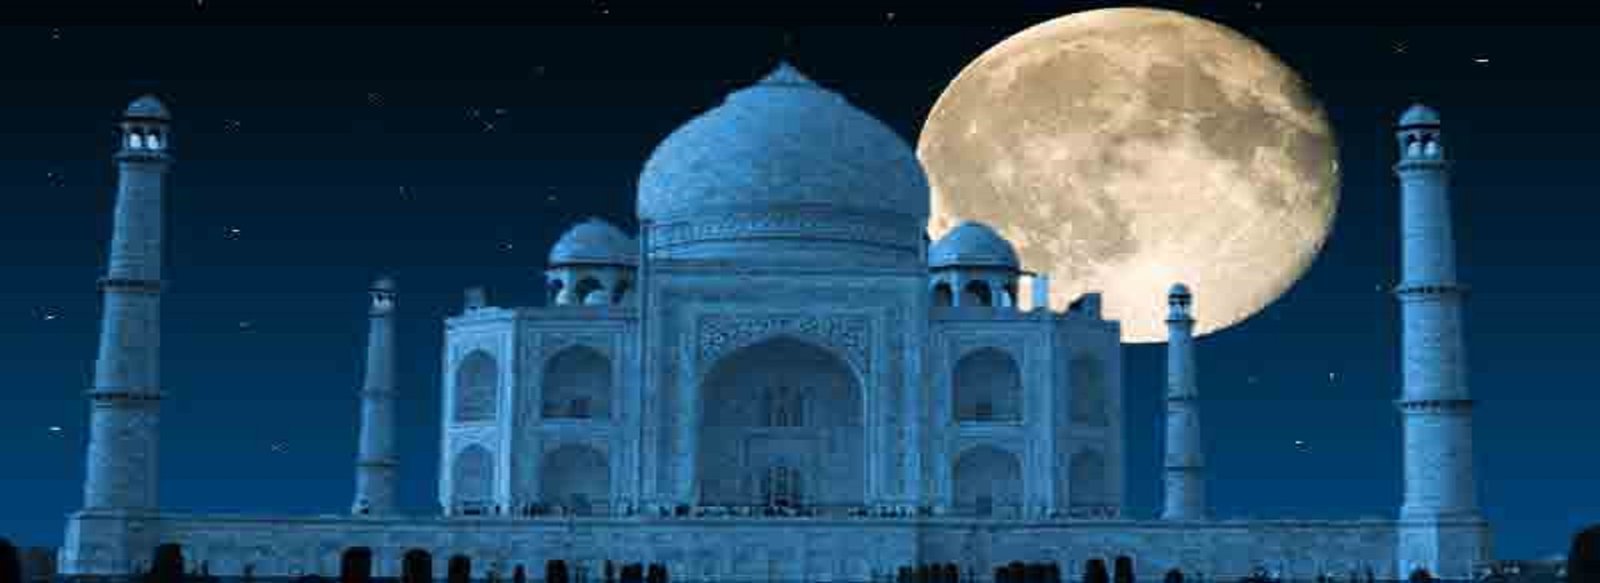 Taj View Point to Enhance Night Tourism in Agra